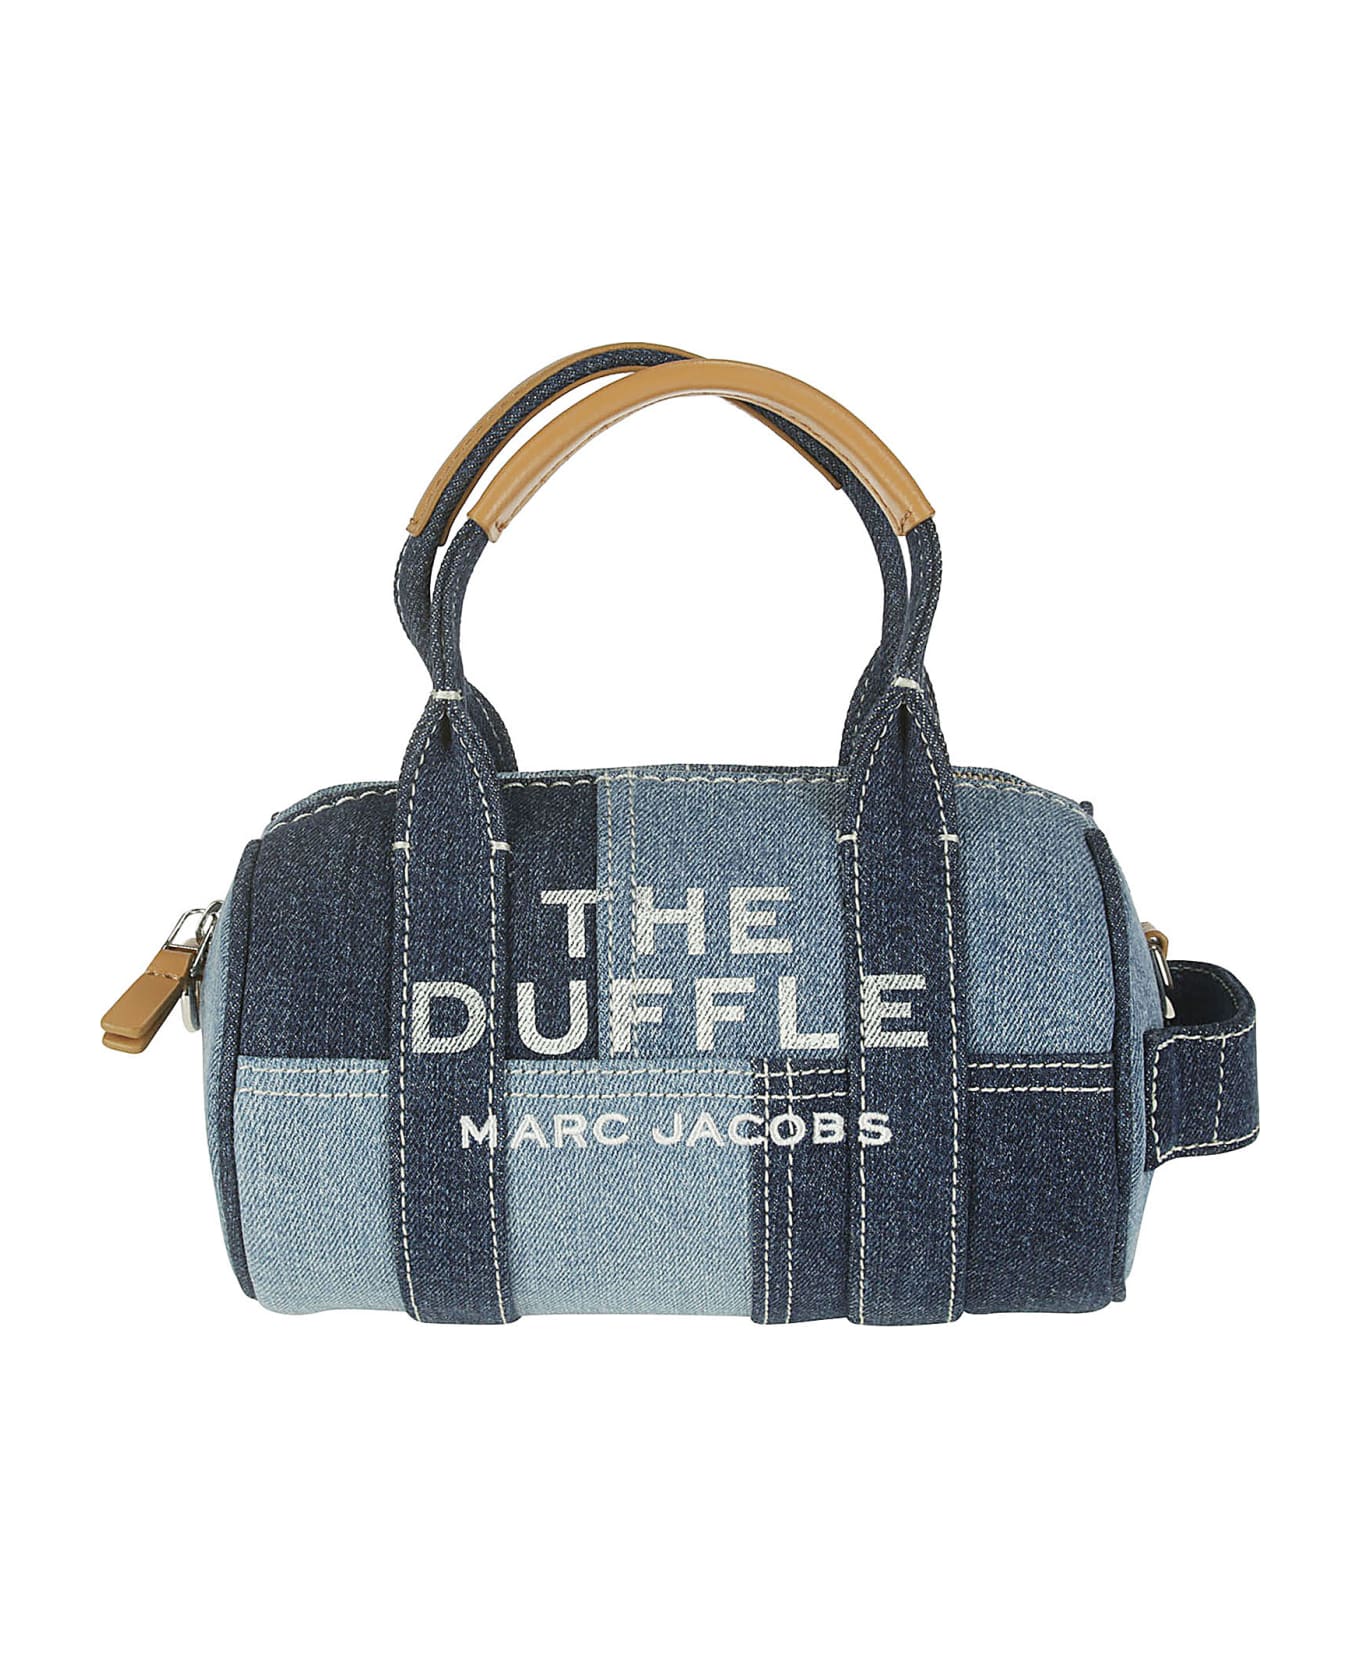 Marc Jacobs The Duffle Handbag - BLUE DENIM